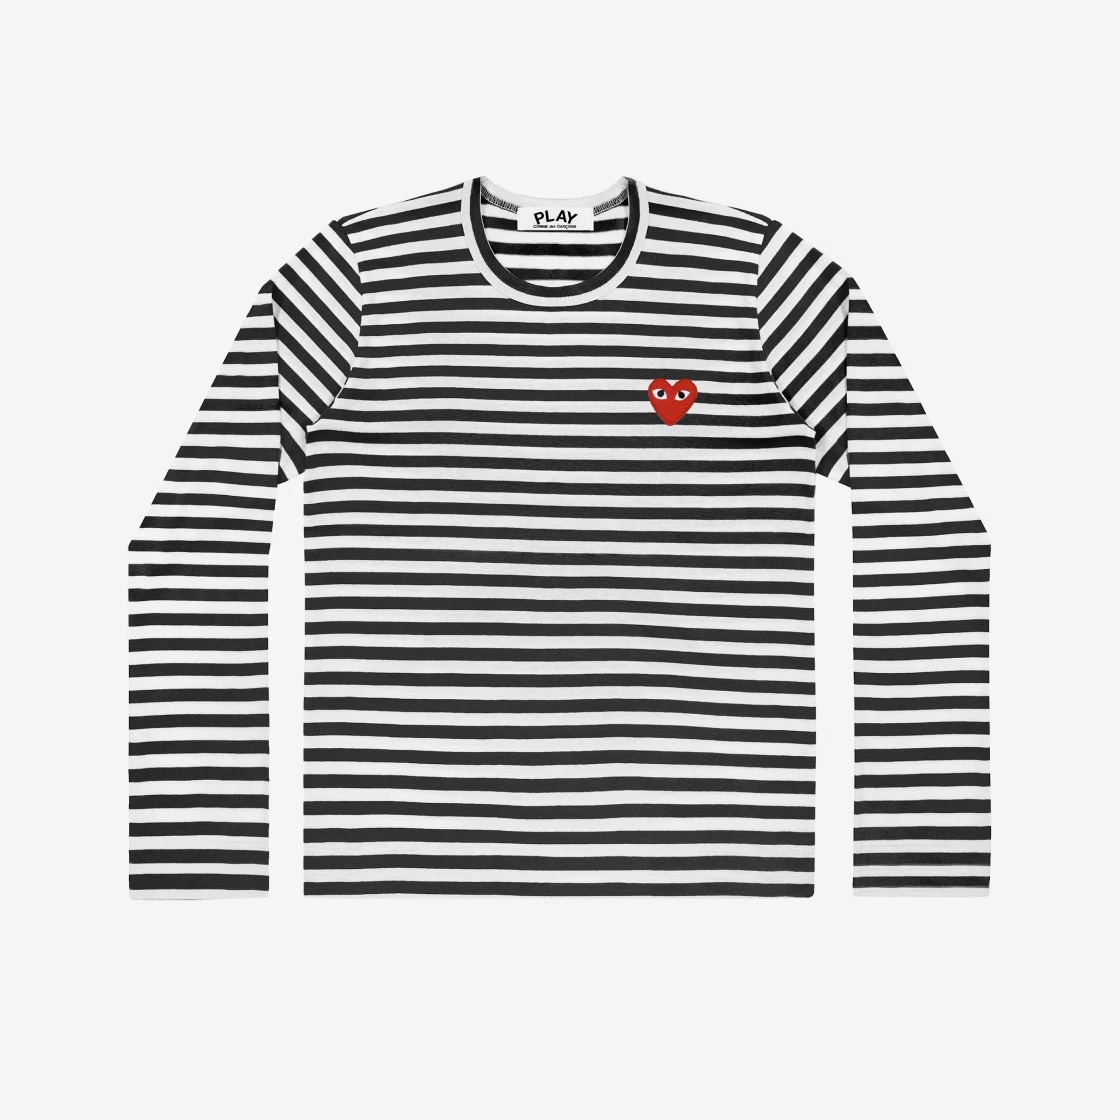 https://d2cva83hdk3bwc.cloudfront.net/w-play-comme-des-garcons-striped-ls-t-shirt-black-white-1.jpg